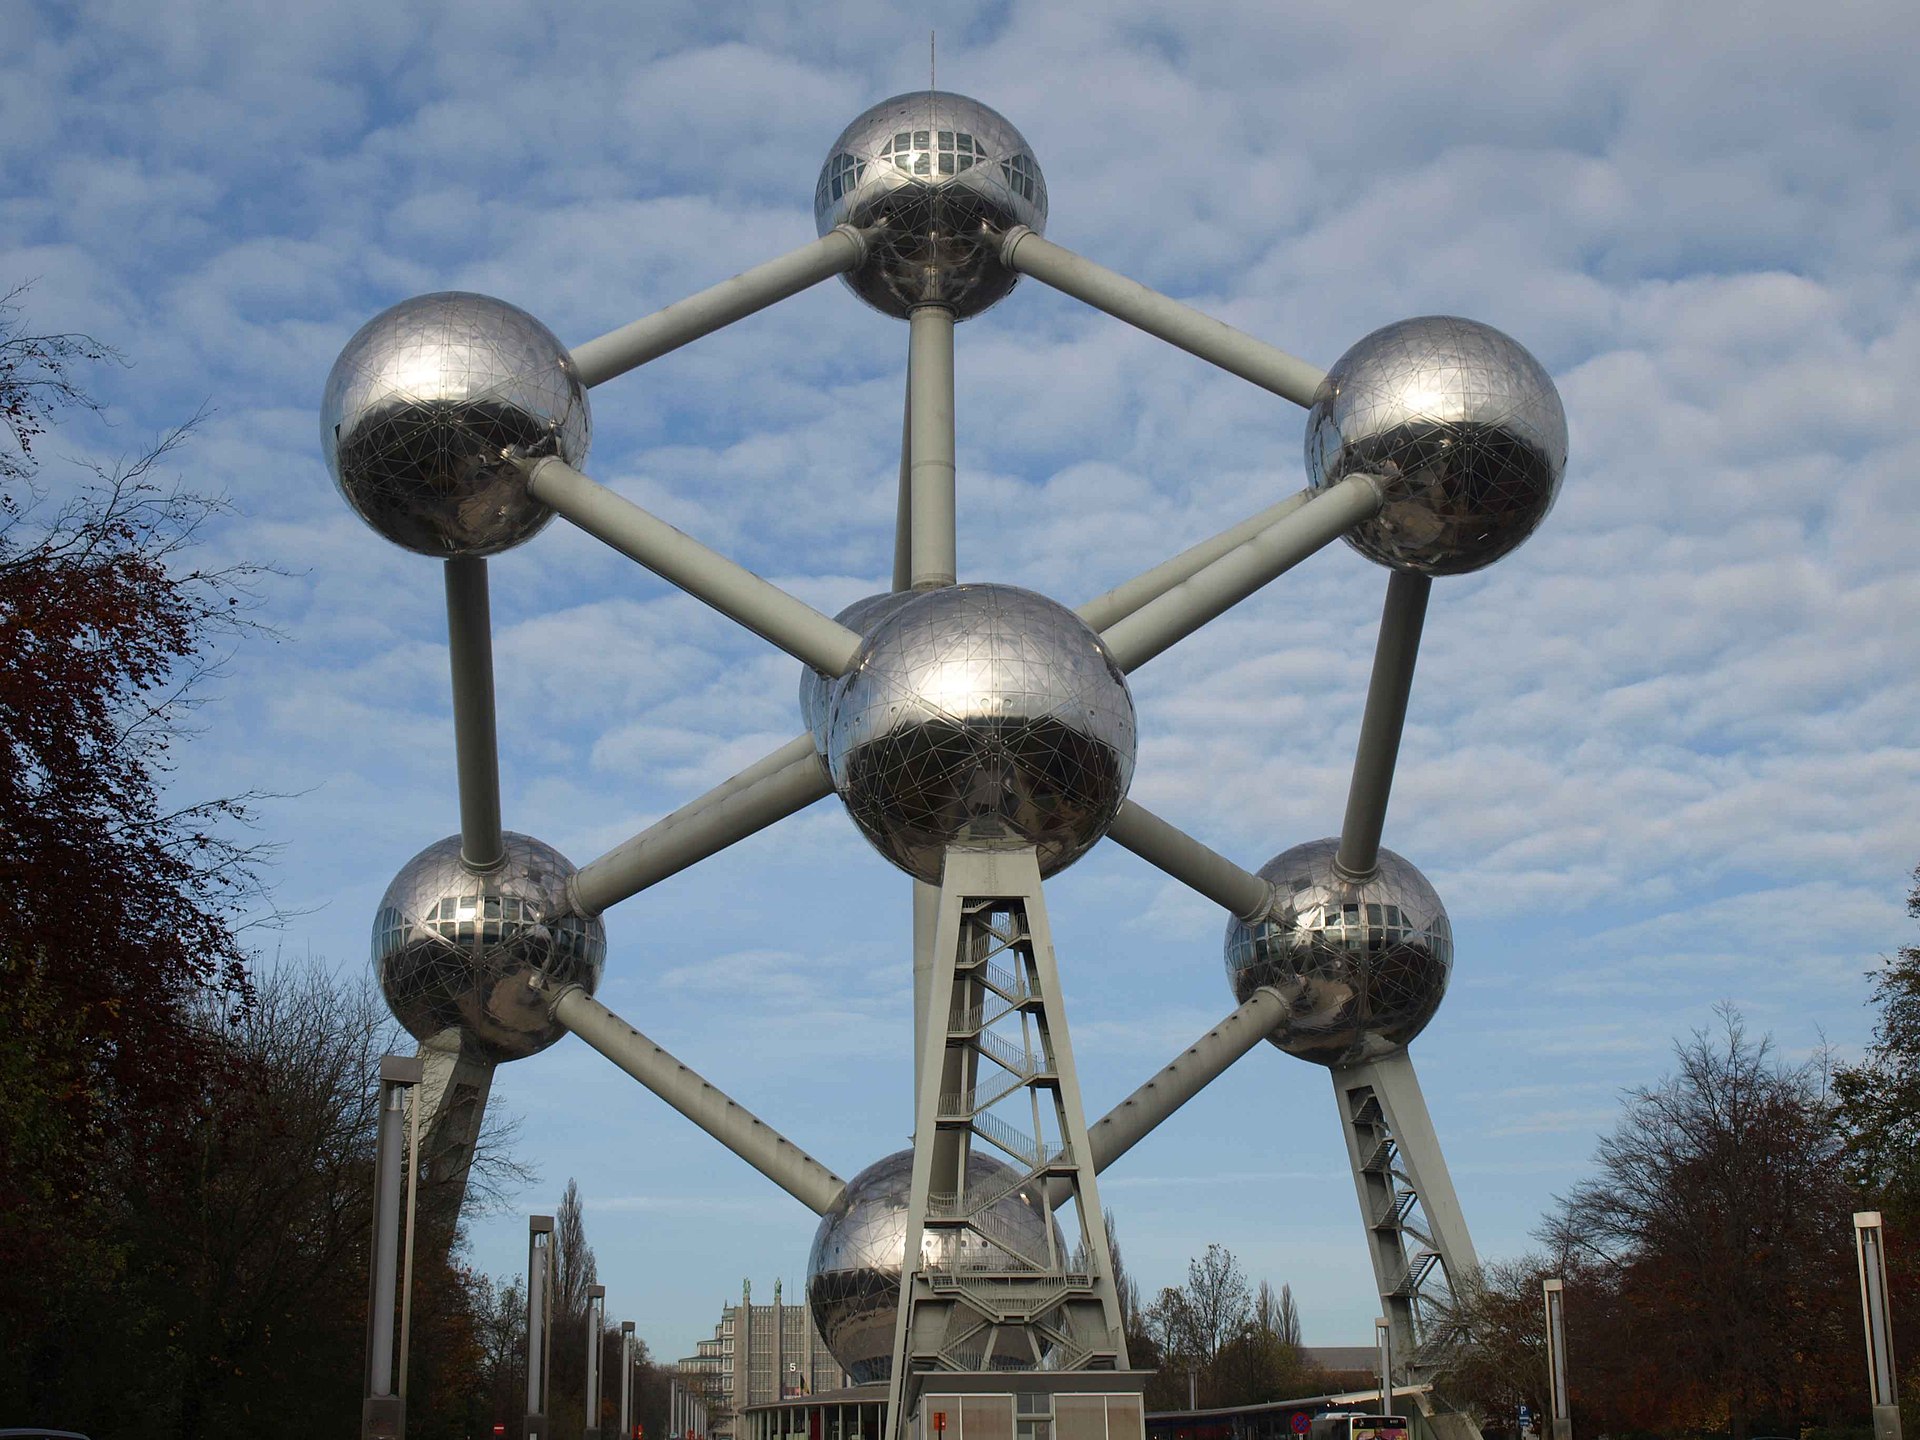 Atomium - Wikipedia